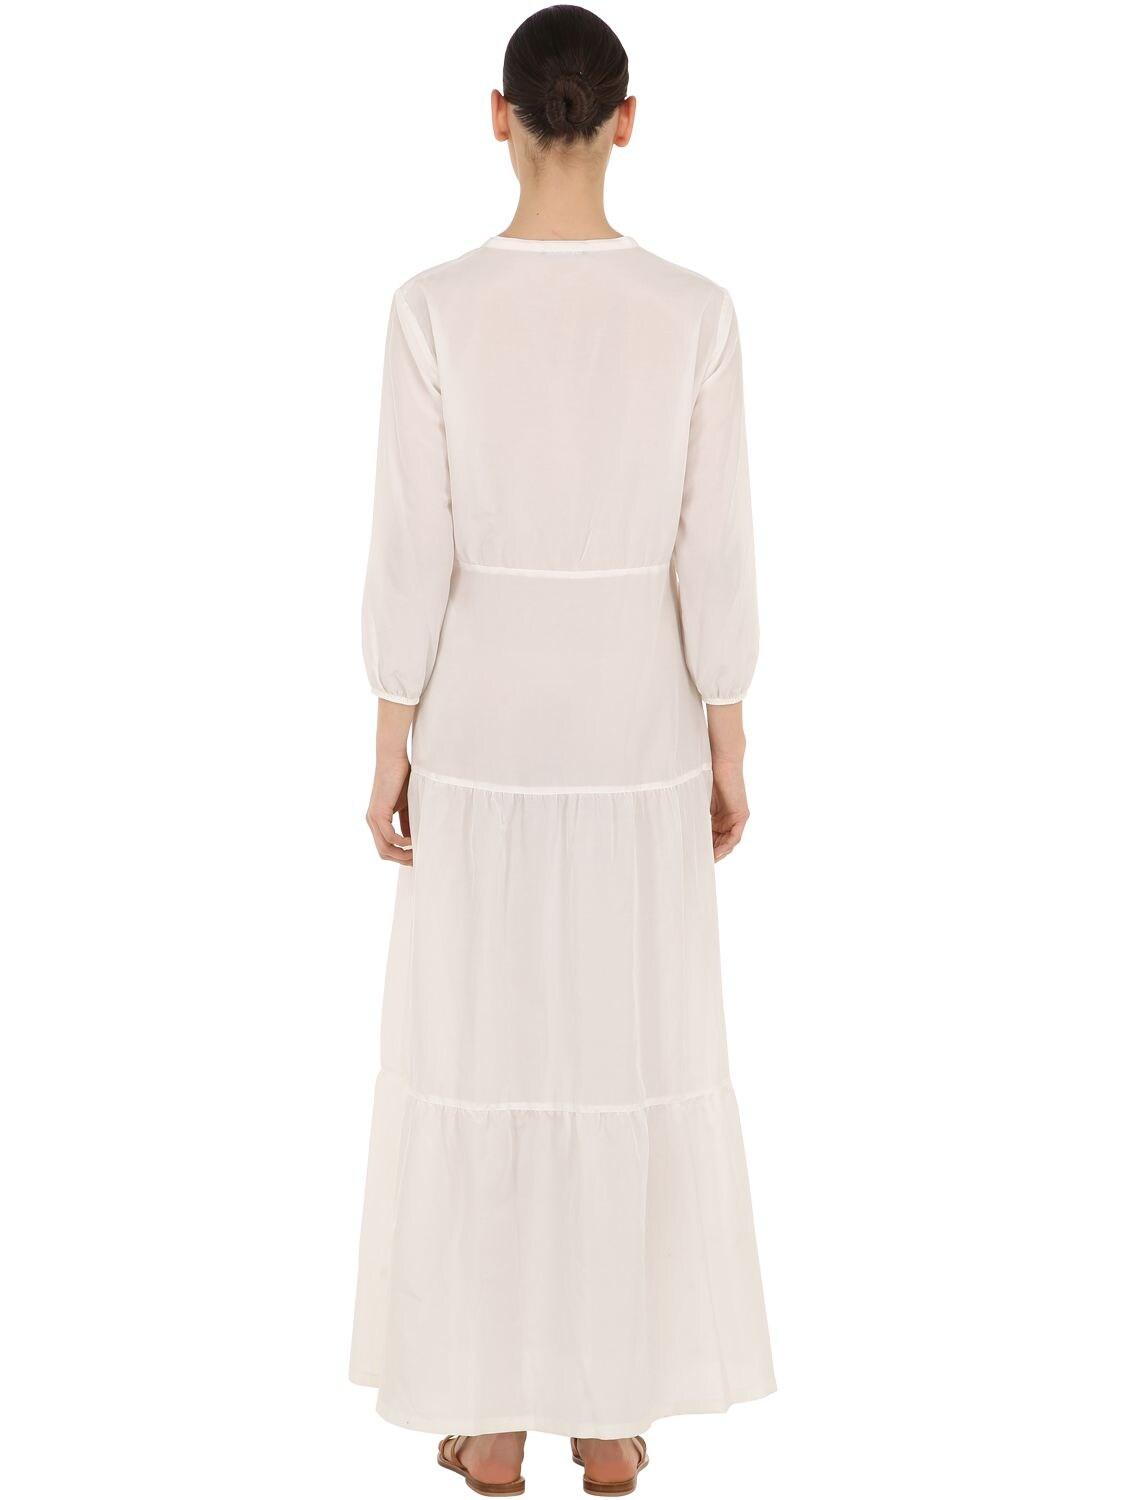 Laura Urbinati Long Tiered Poplin & Silk Dress in White - Lyst